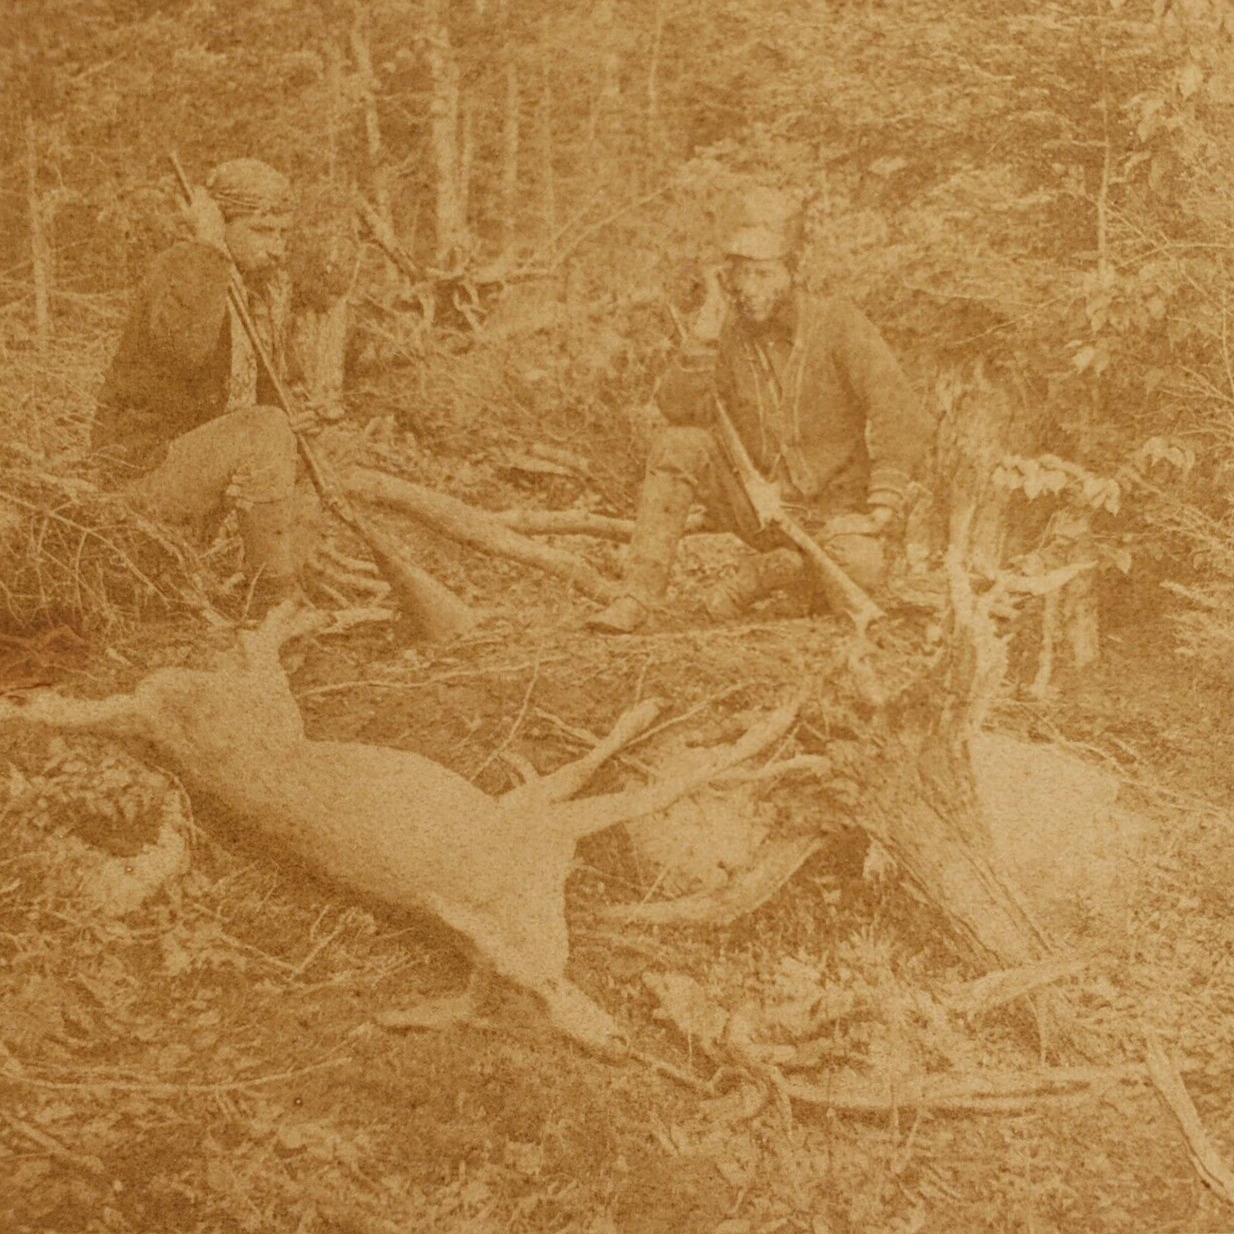 Deer Hunters Resting Guns Stereoview c1880 Kilburn Hunting Rifles Antique A1630